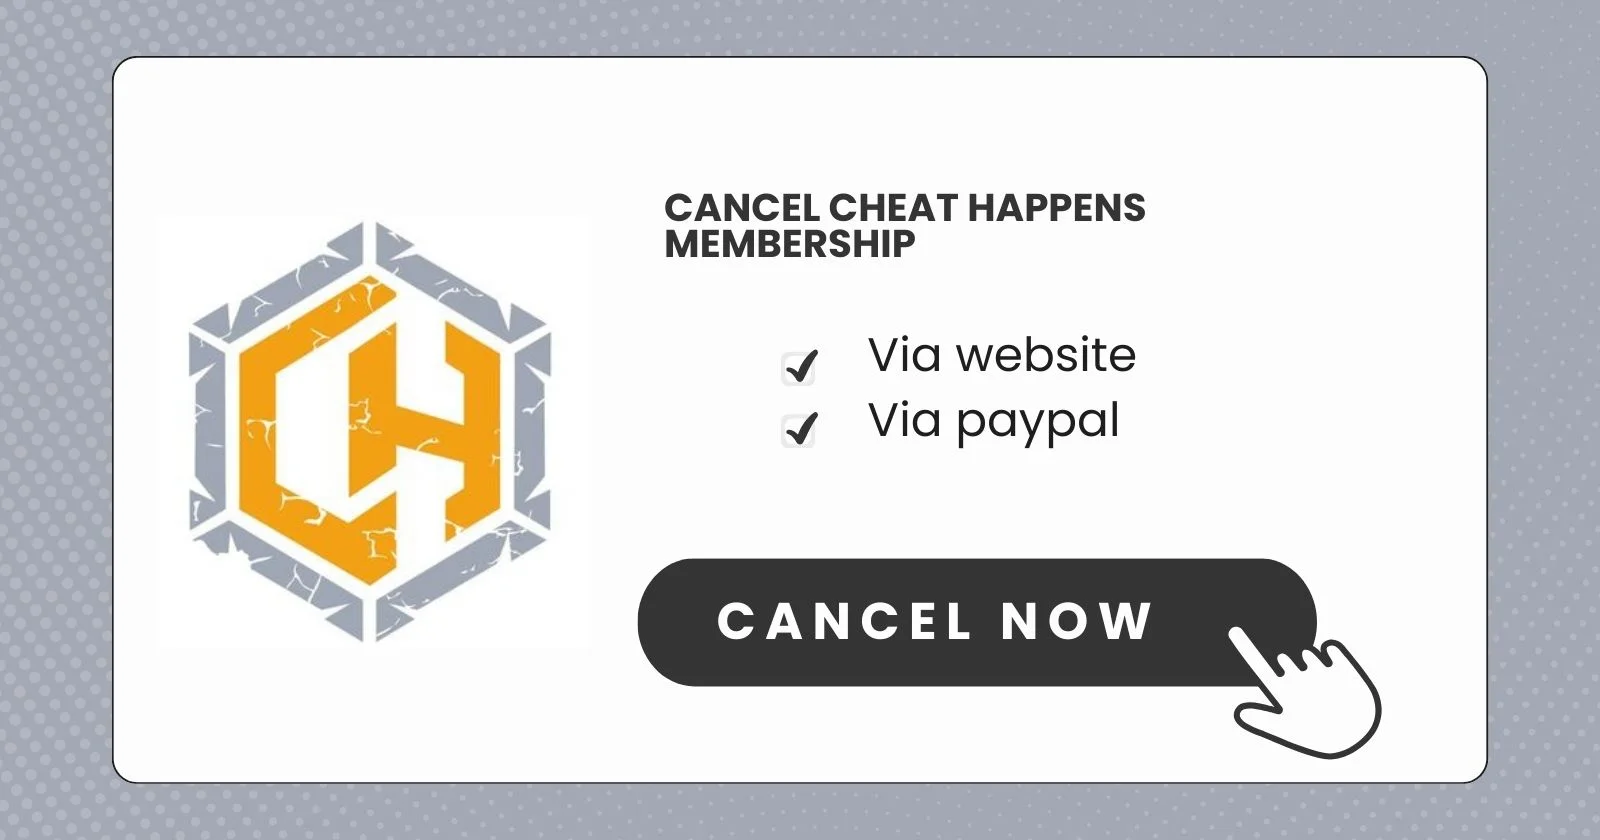 Cancel Cheat Happens Membership